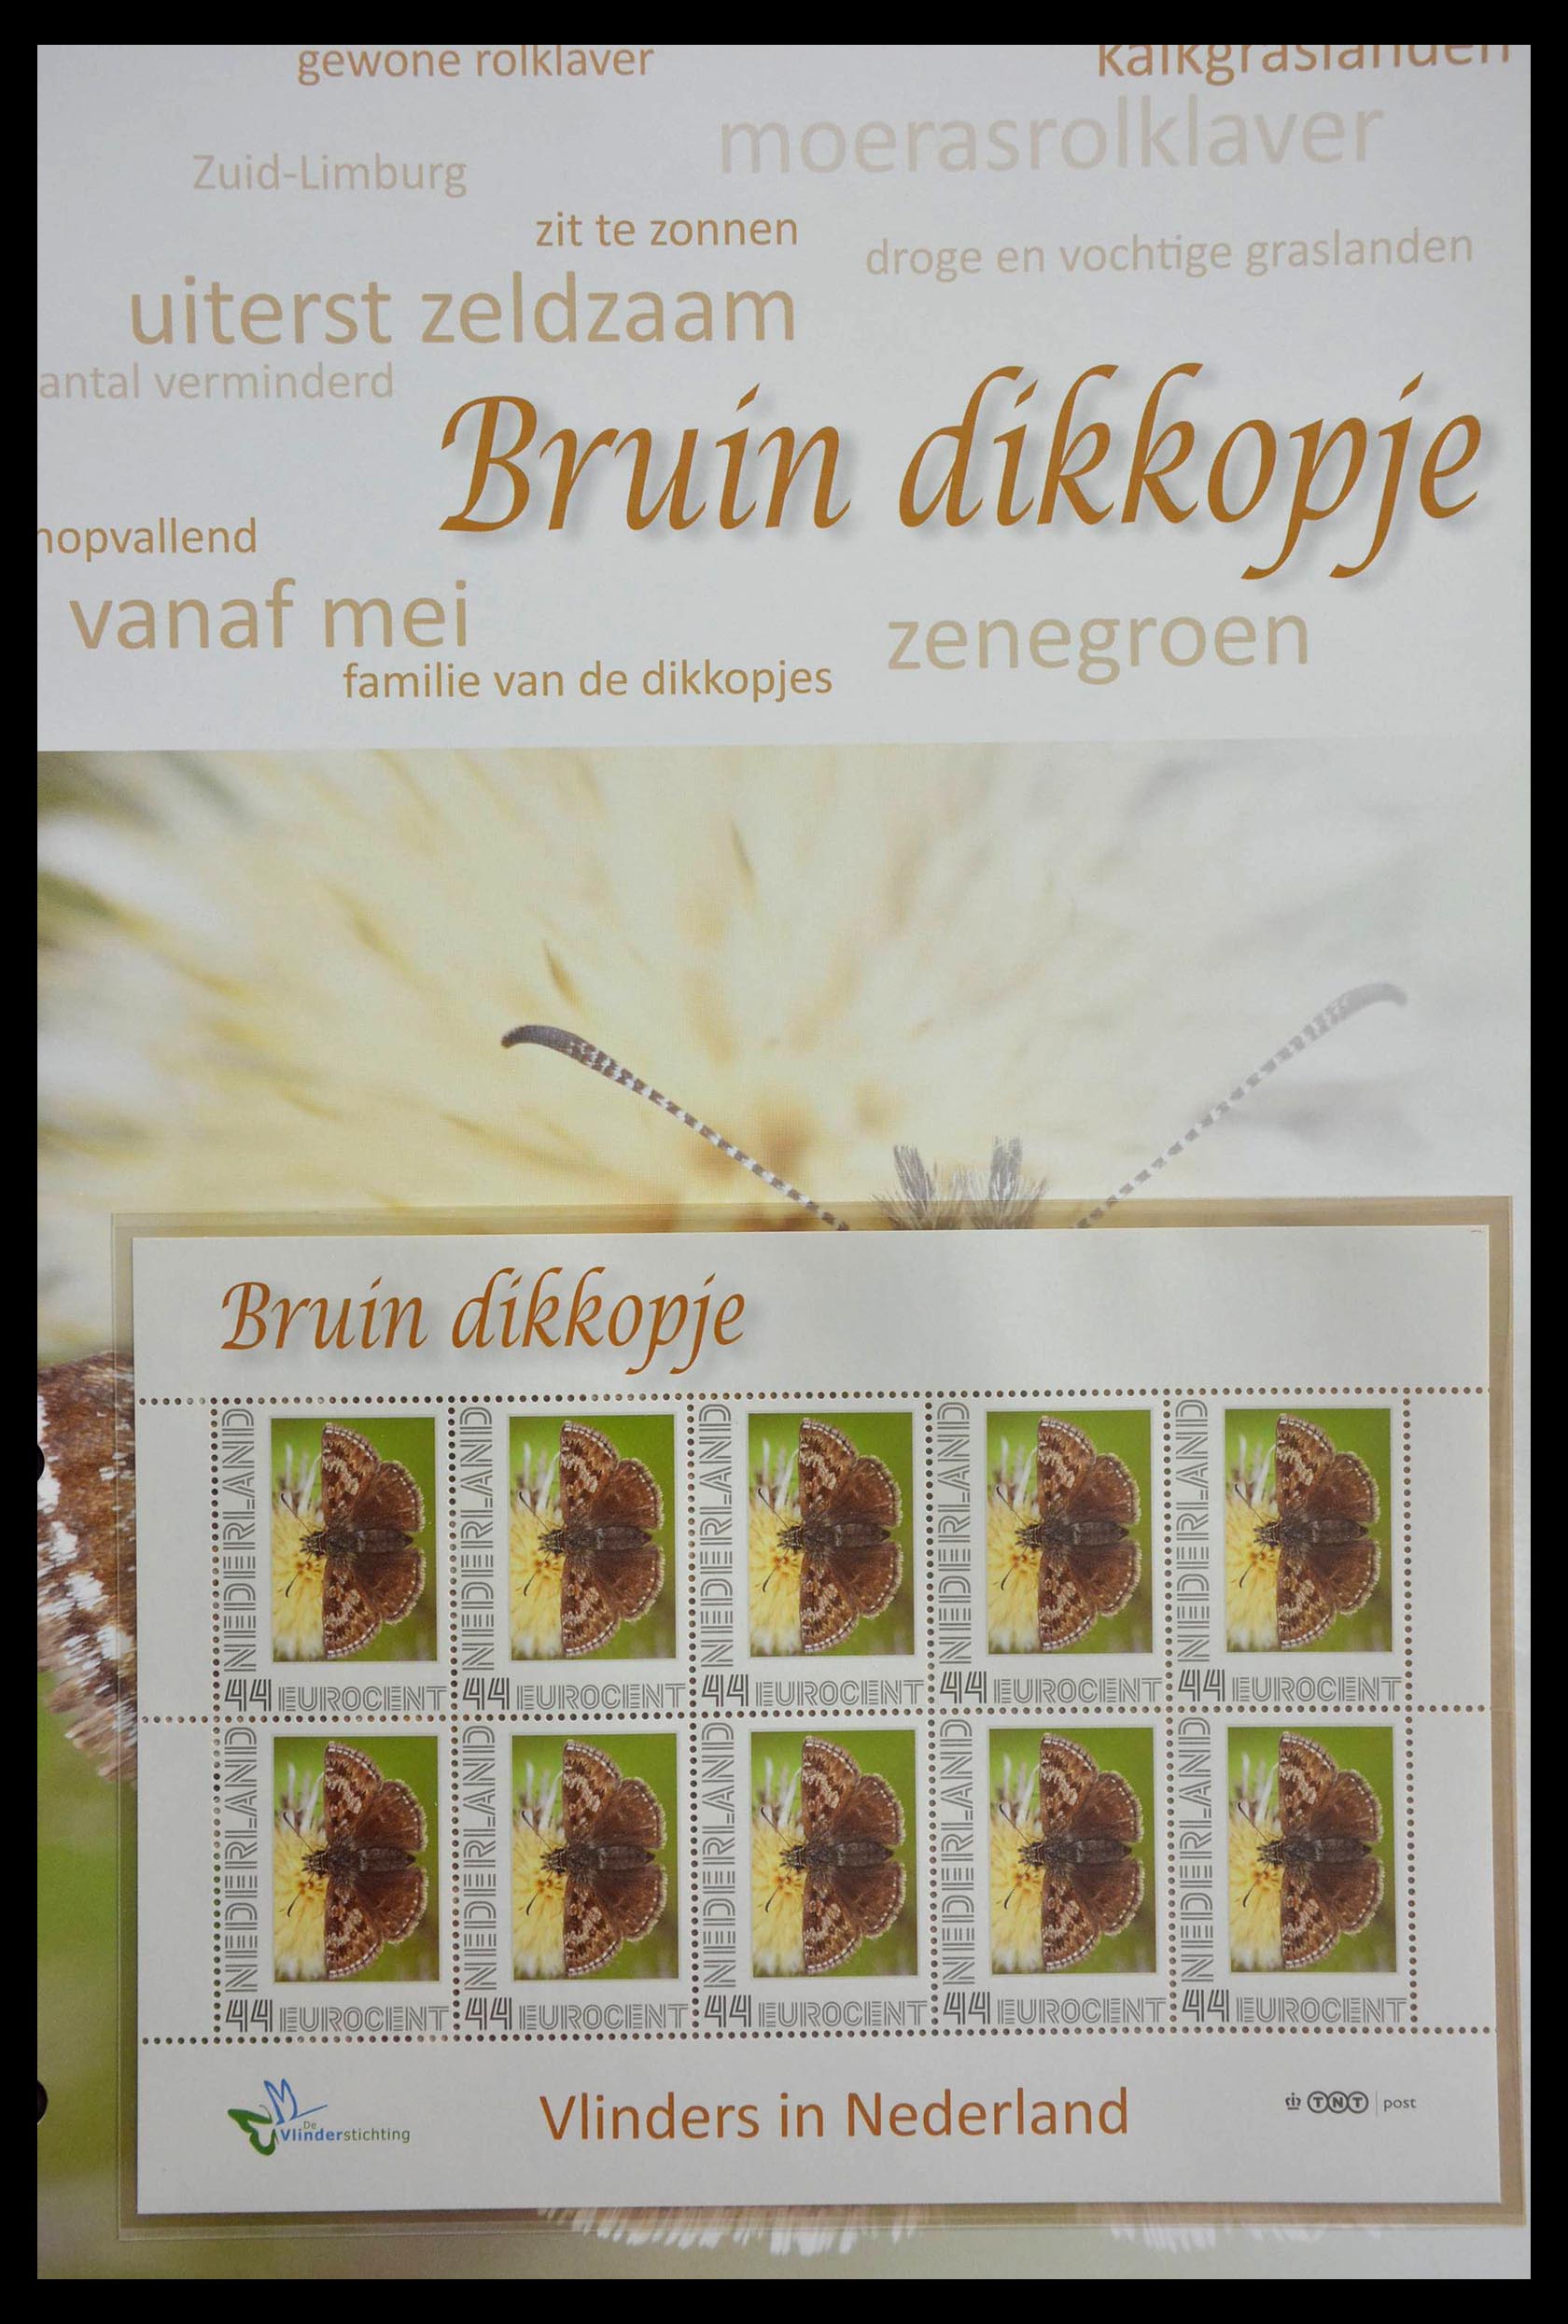 13105 016 - 13105 Butterflies in the Netherlands.